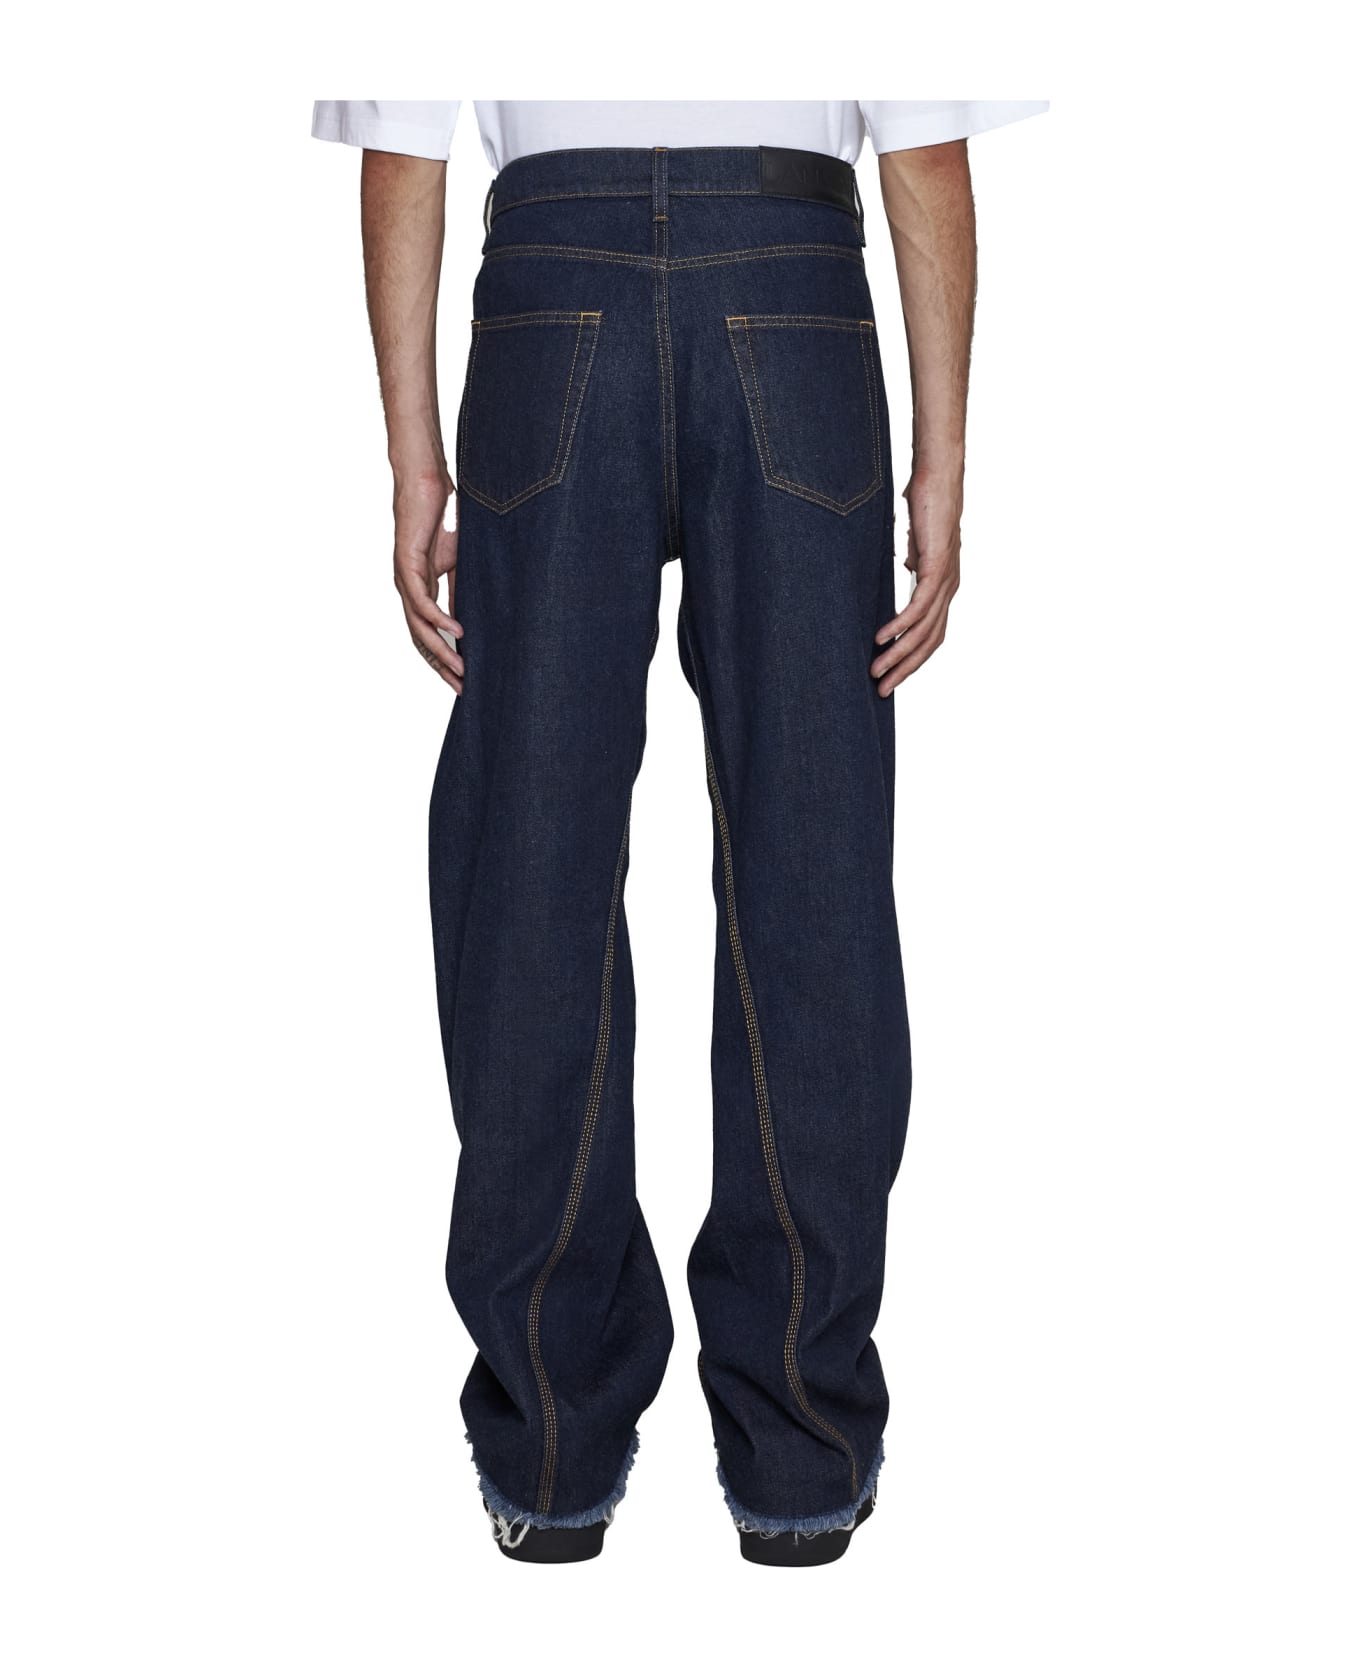 Lanvin Twisted Denim Jeans - NAVYBLUE